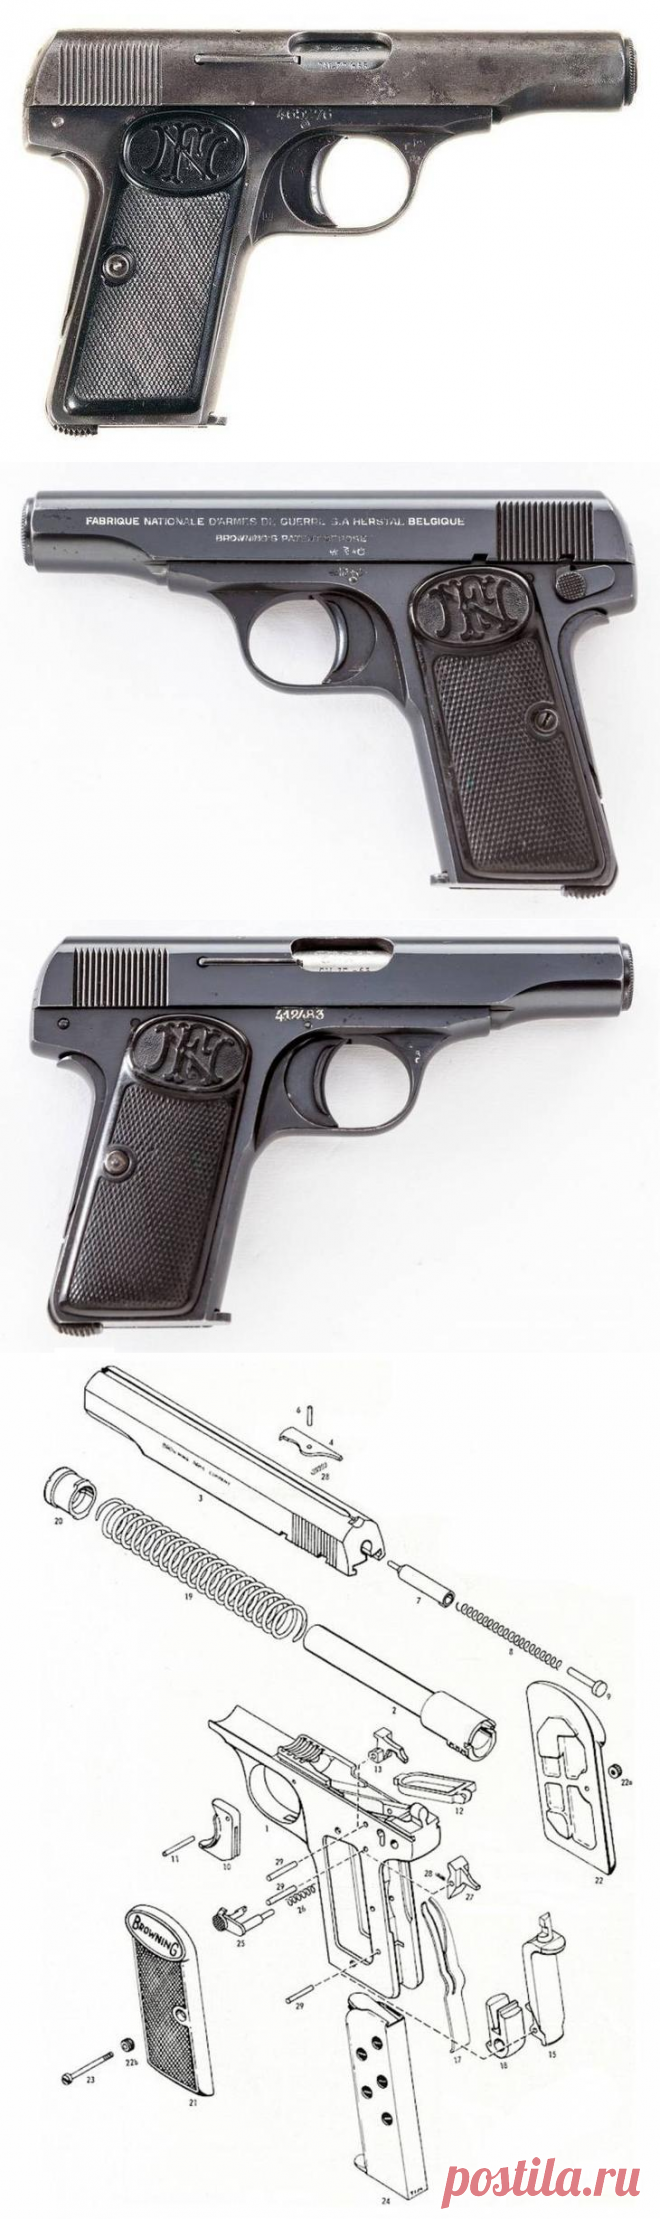 Пистолет Браунинг образца 1910 года (FN Browning 1910)